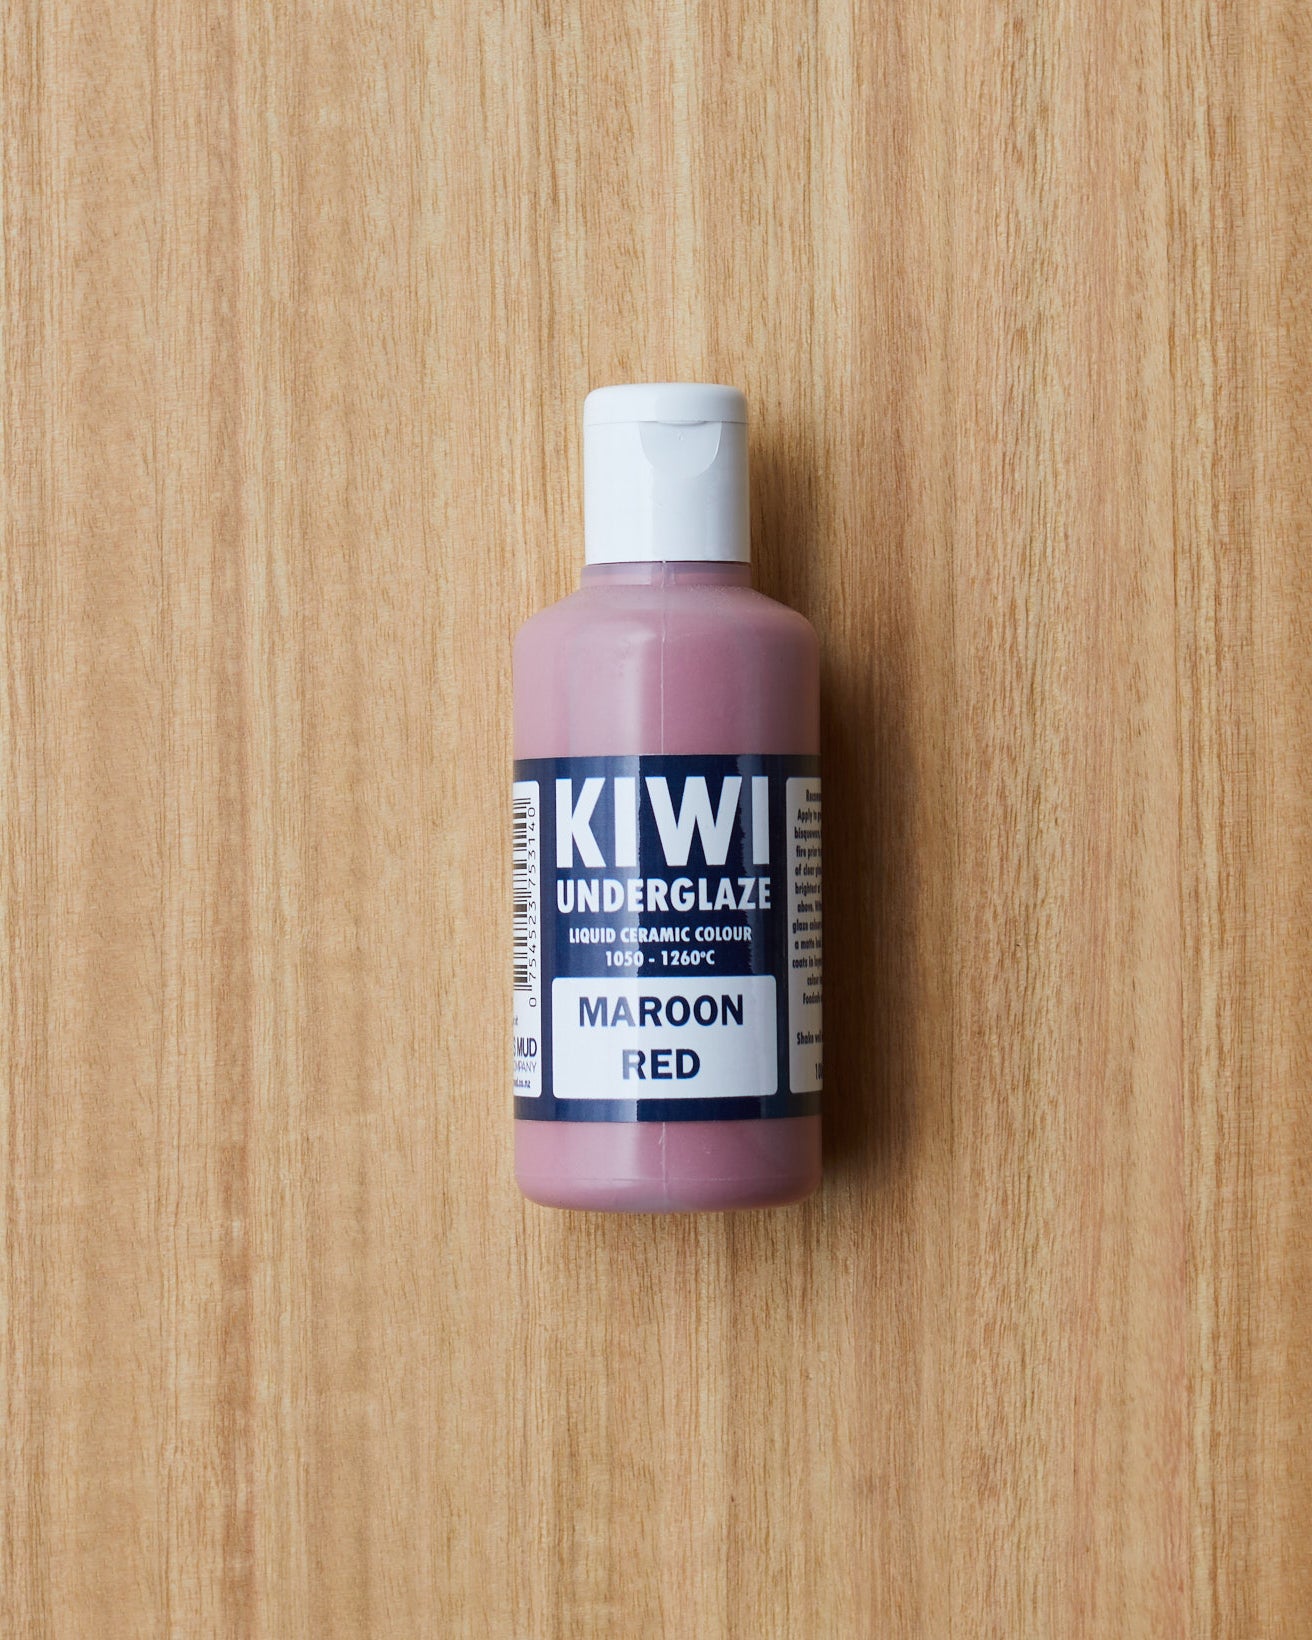 Kiwi Underglaze | Maroon Red